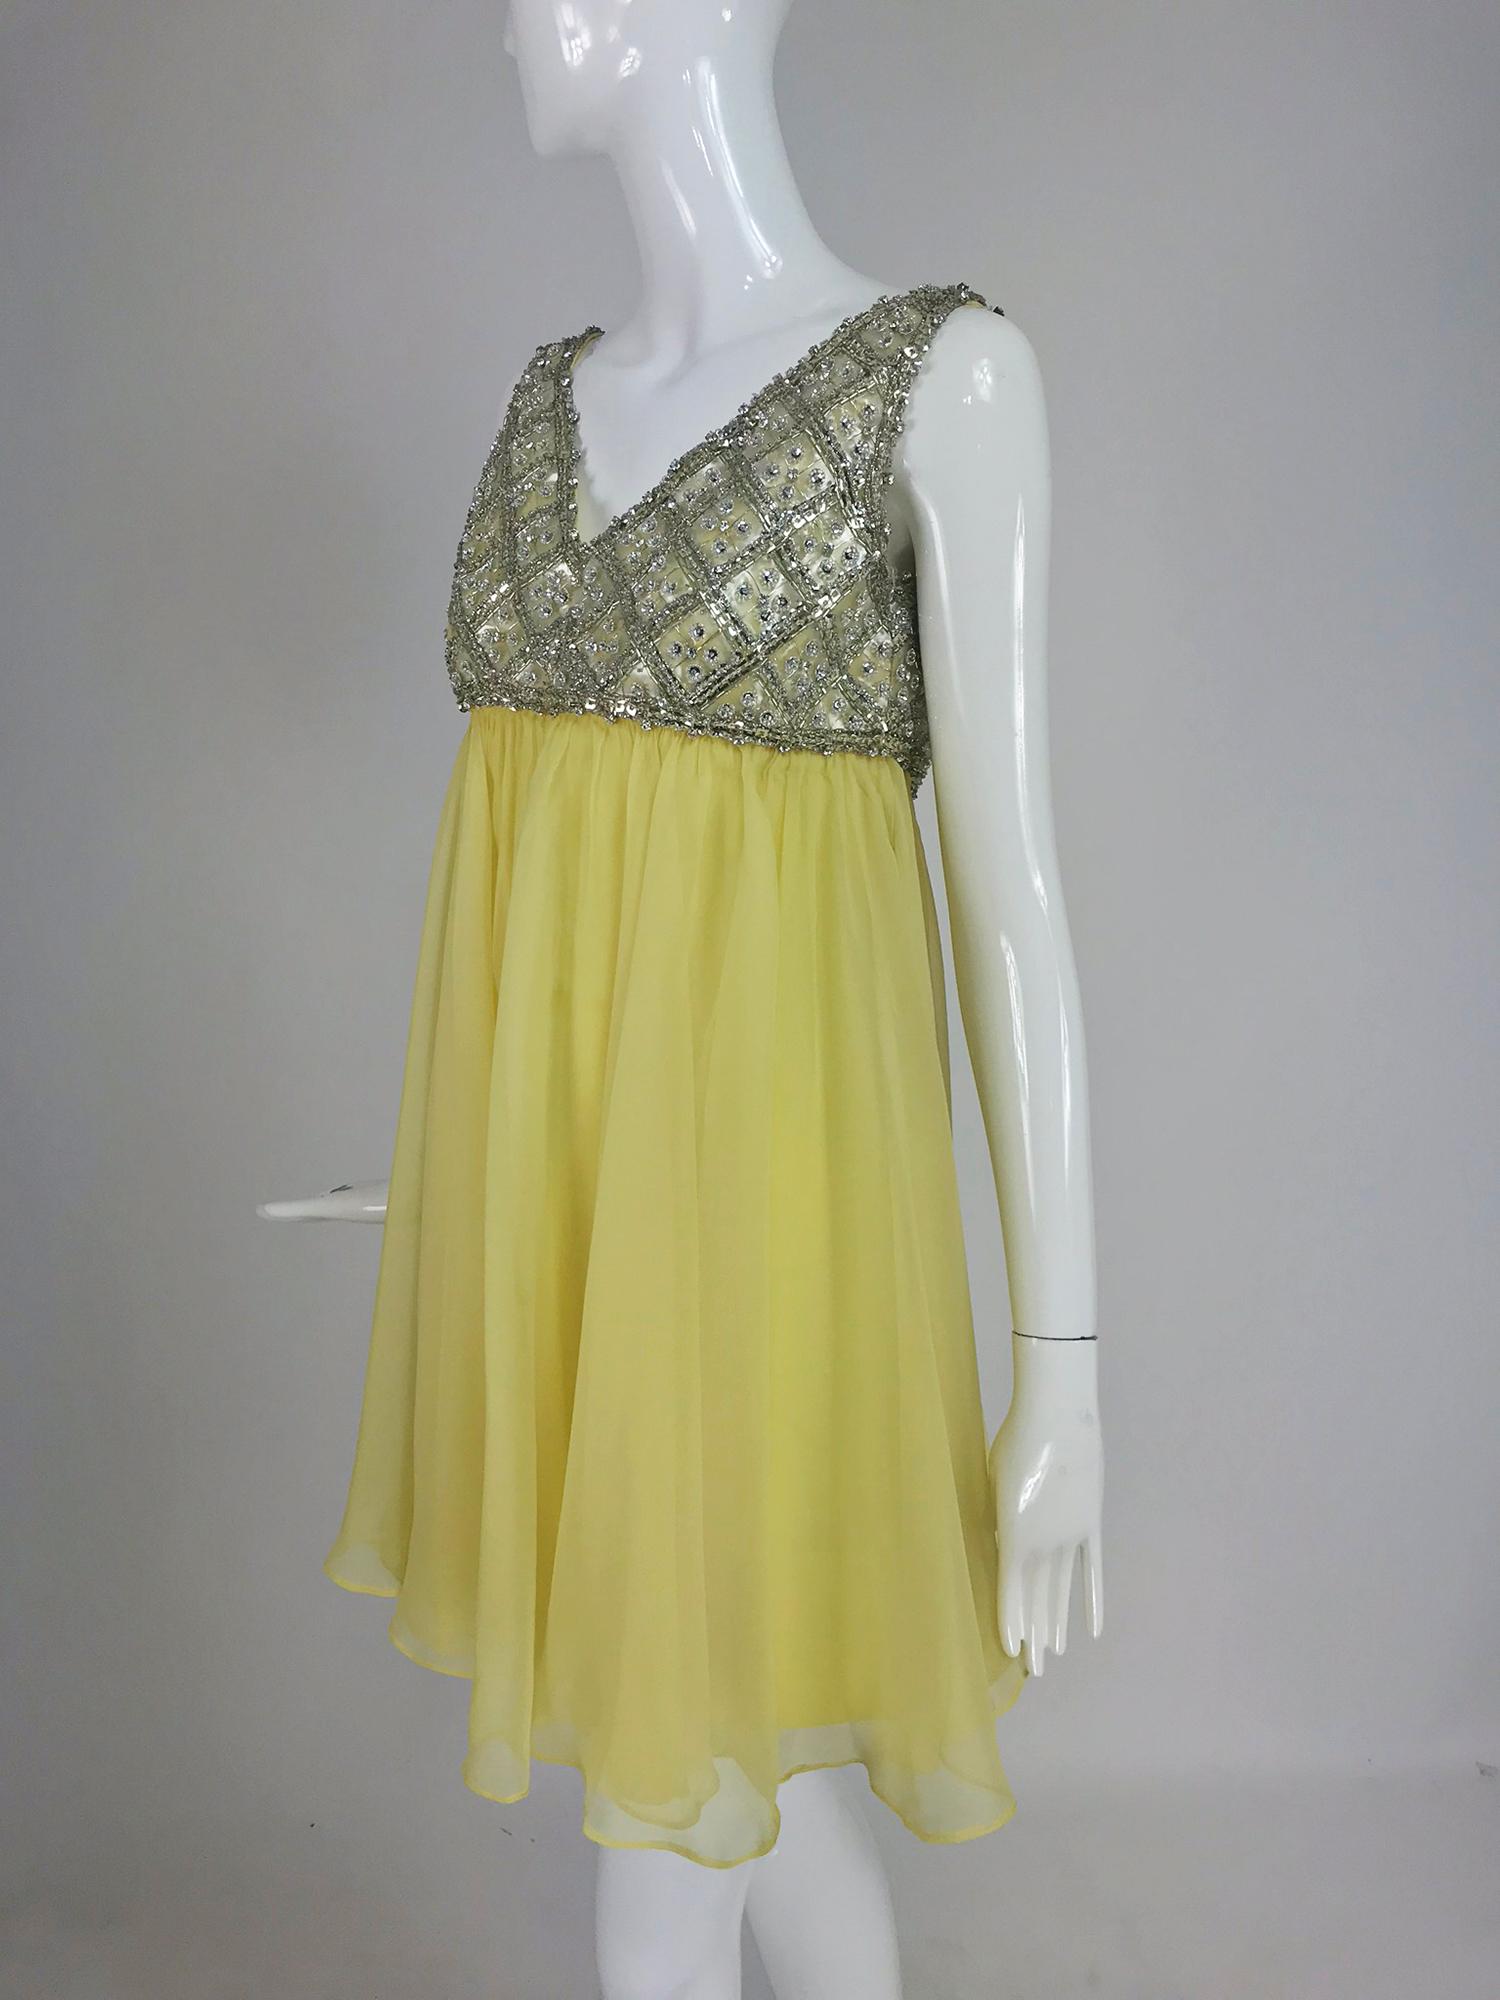 Malcolm Starr Baby Doll dress rhinestones and Lemon Chiffon Silk 1960s (Braun)